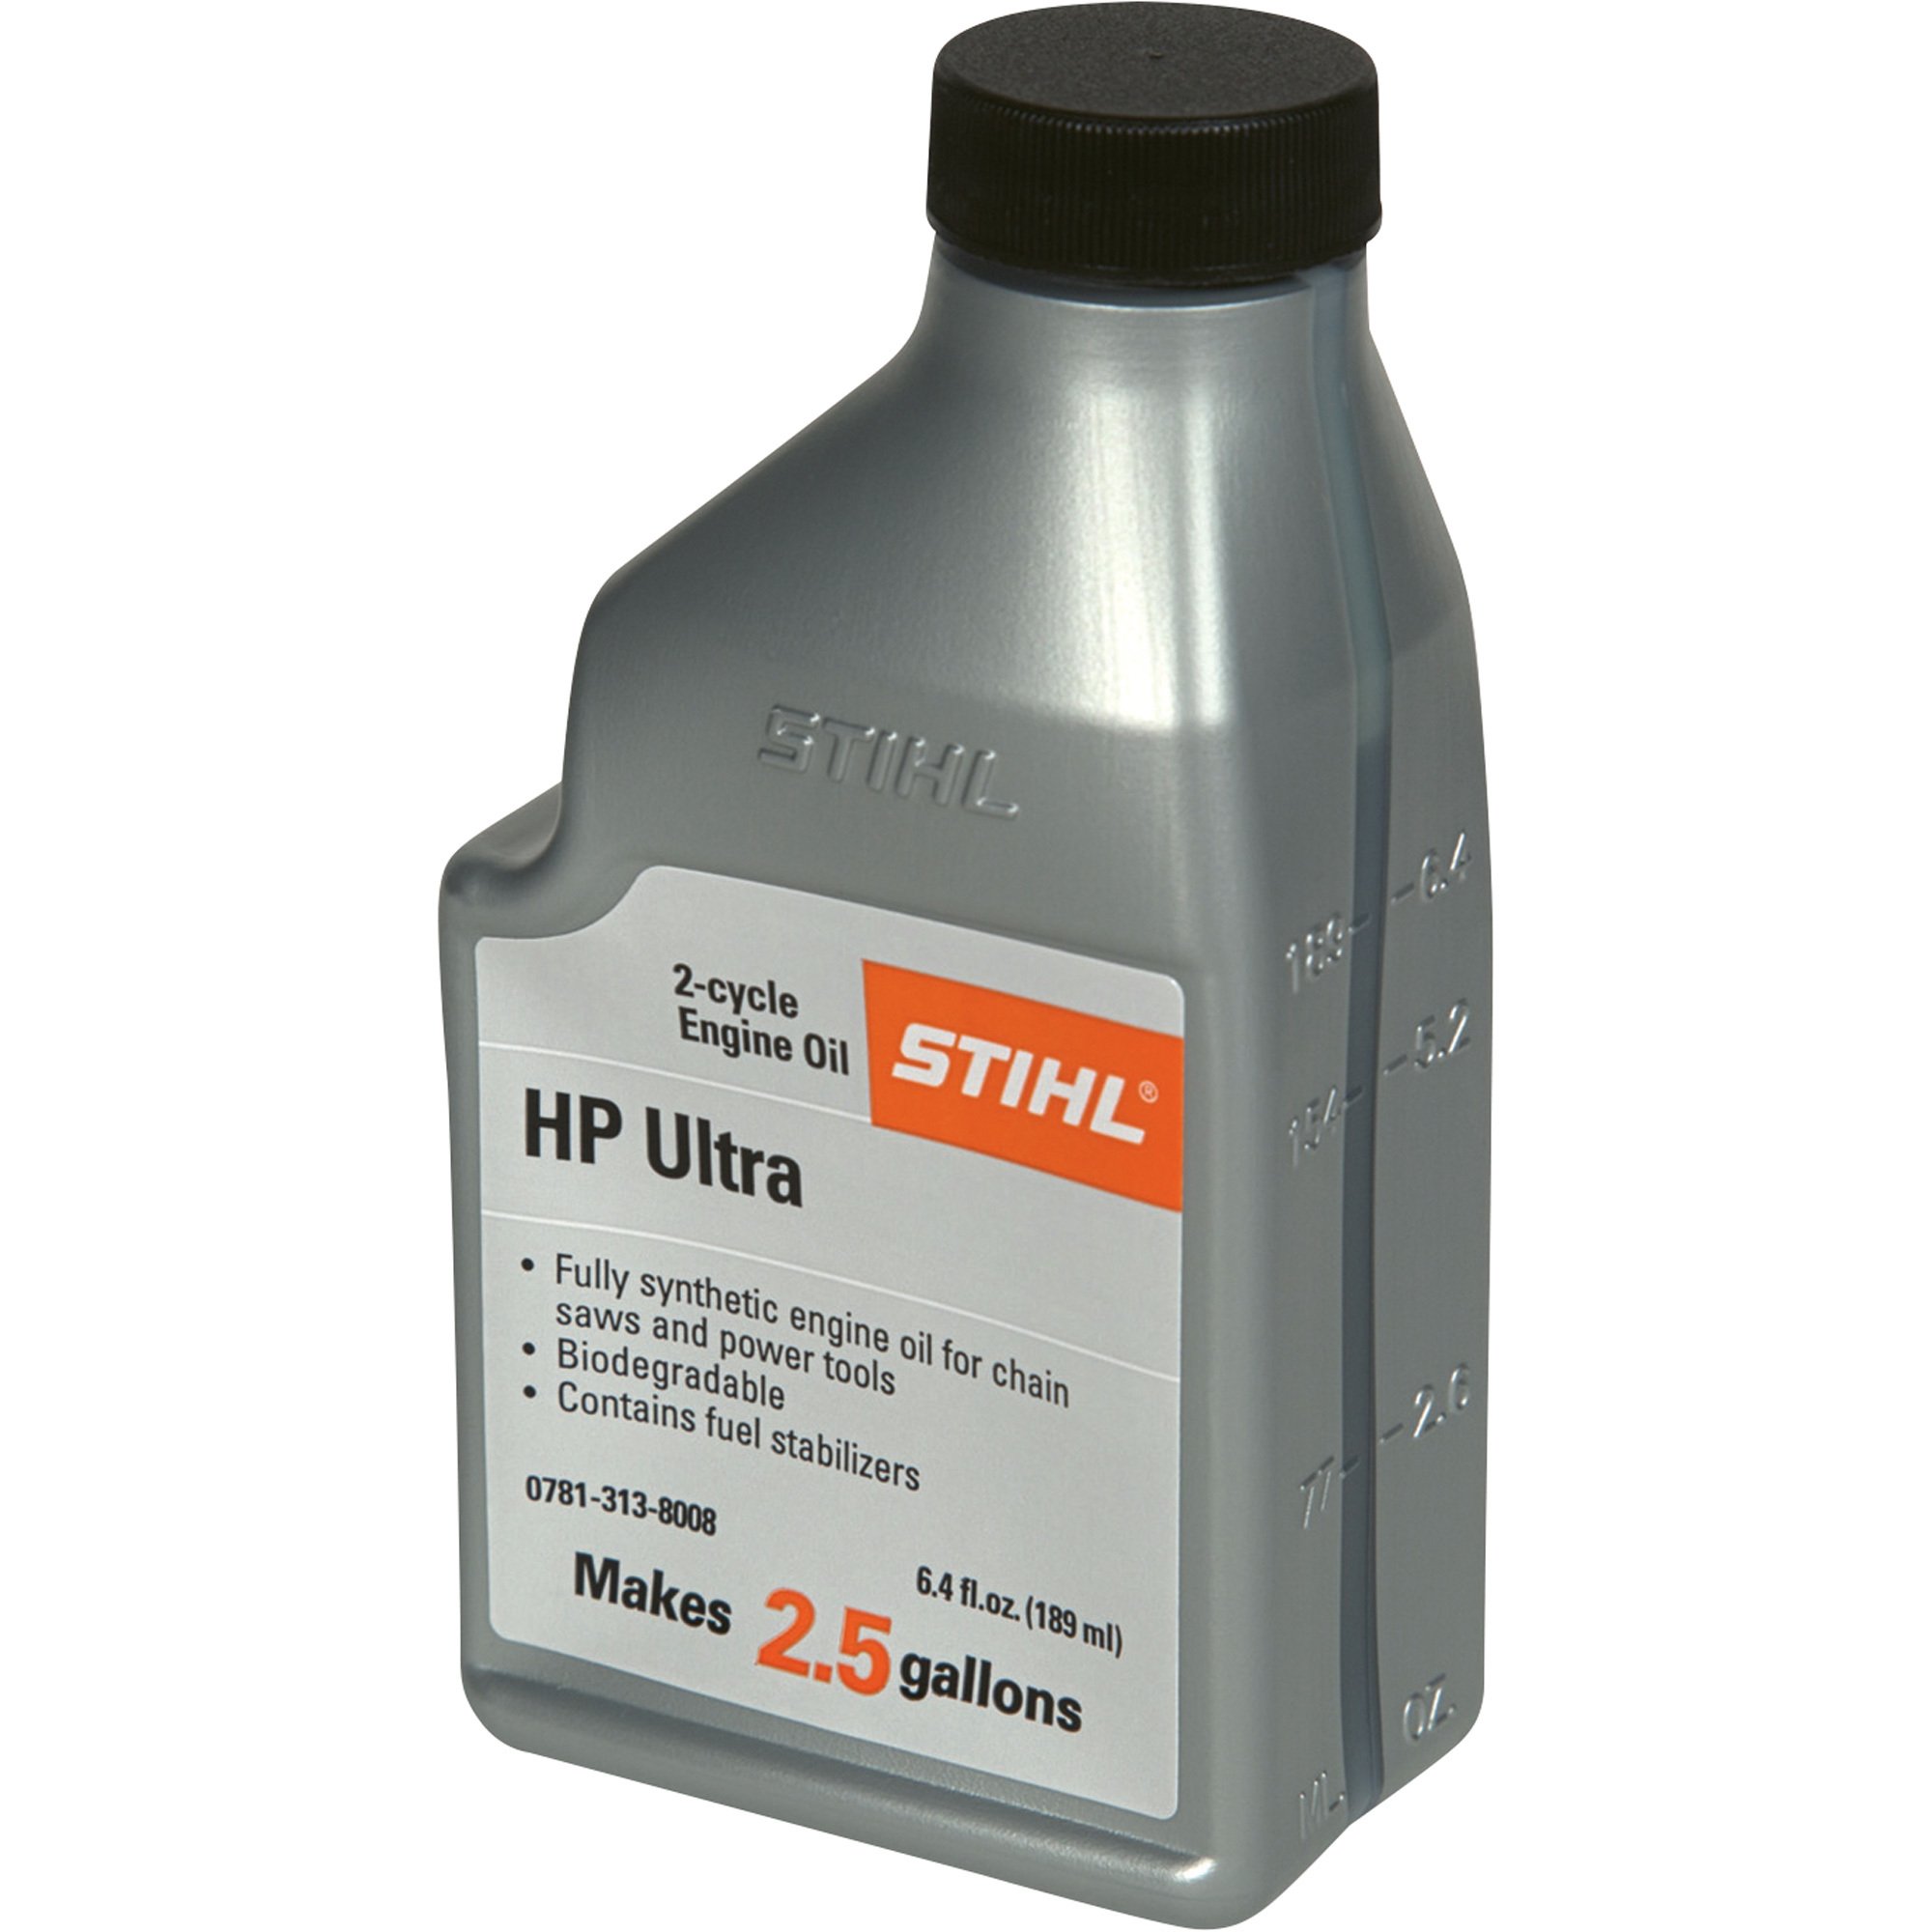 STIHL HP Ultra 2-Cycle Engine Oil — Fully Synthetic, 6.4oz. Btl .